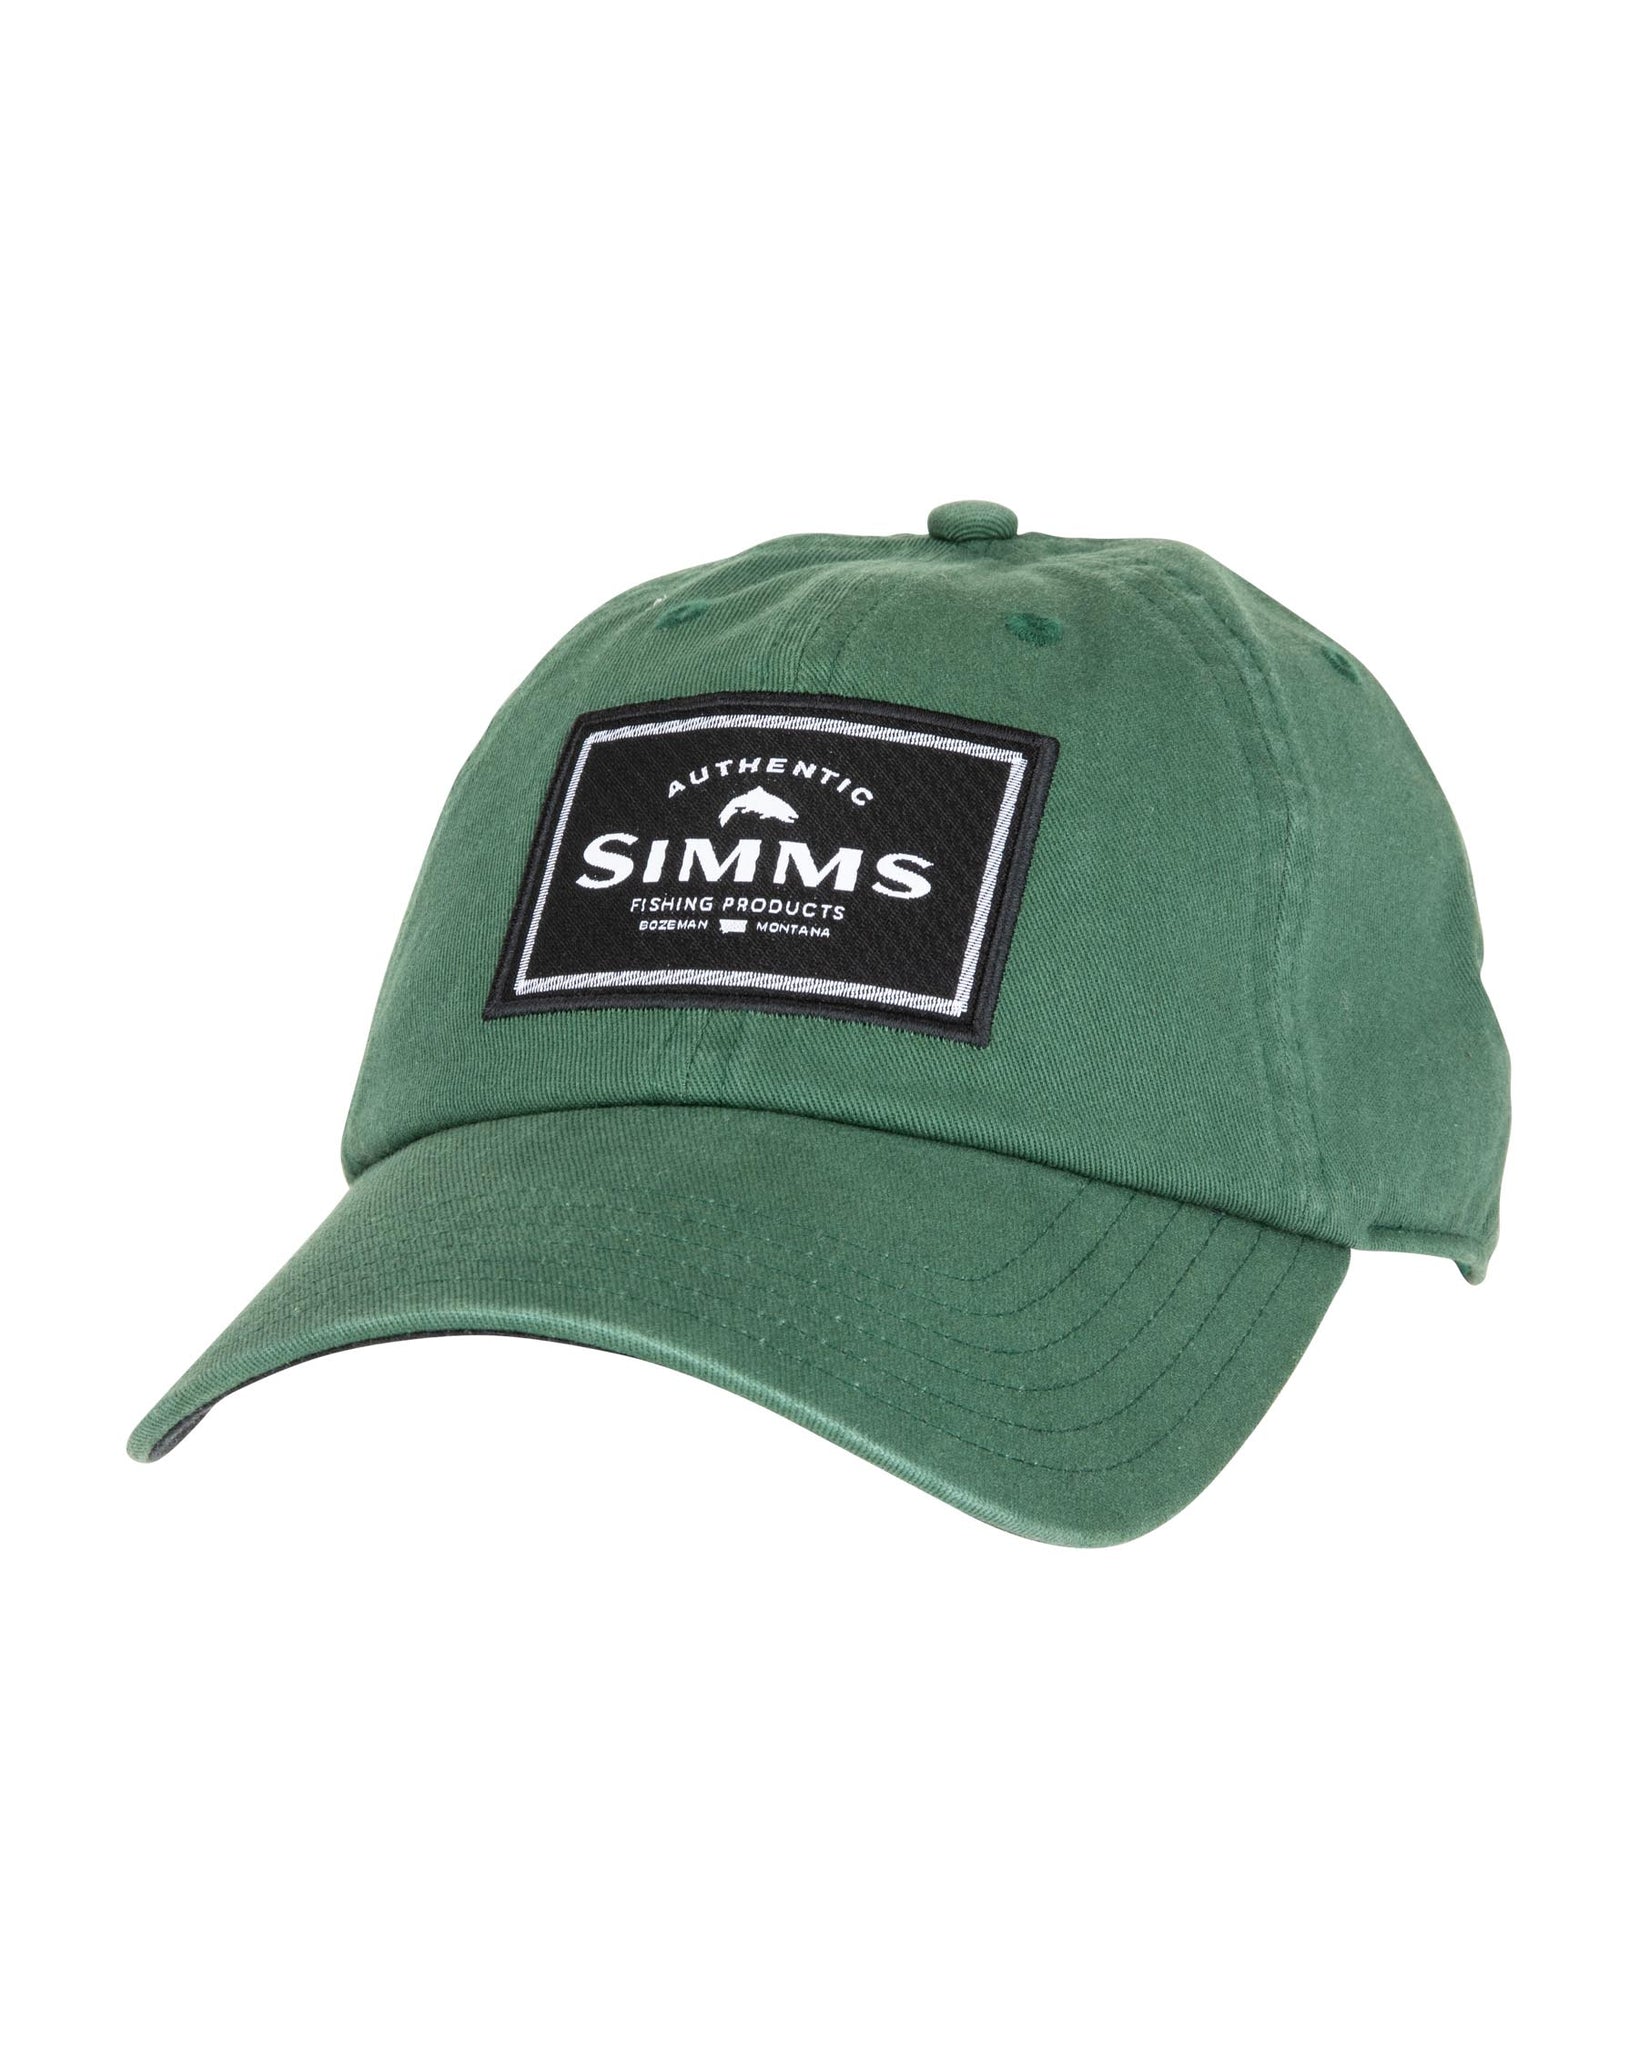 Simms Fishing Single Haul Hat Cap - Sterling Color - NEW! OSFM